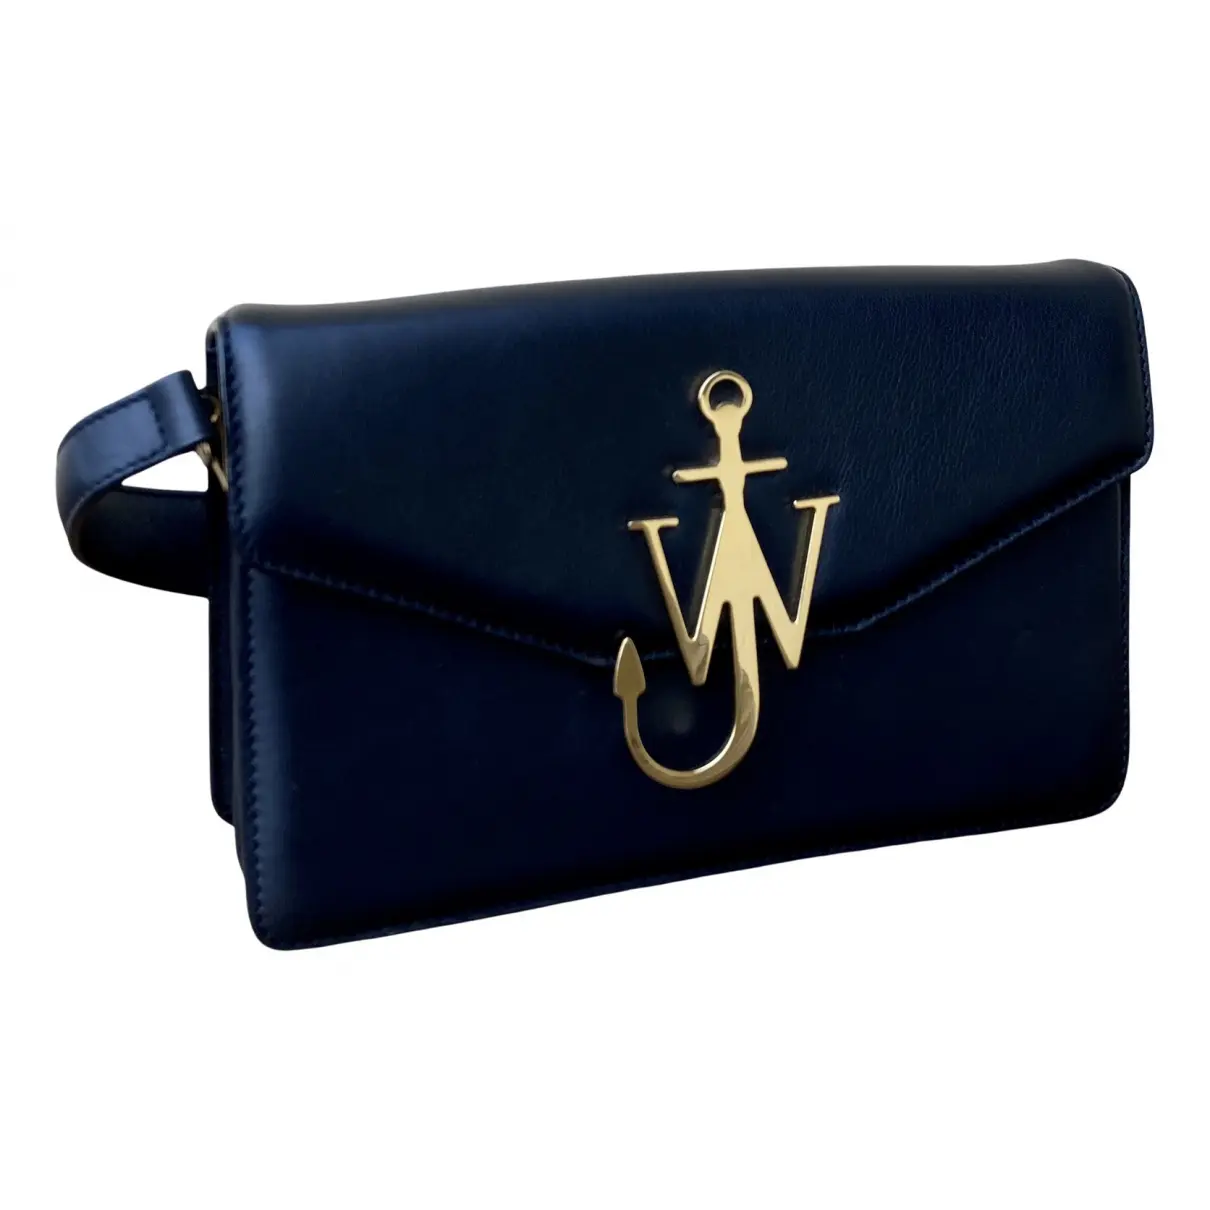 Logo leather handbag JW Anderson